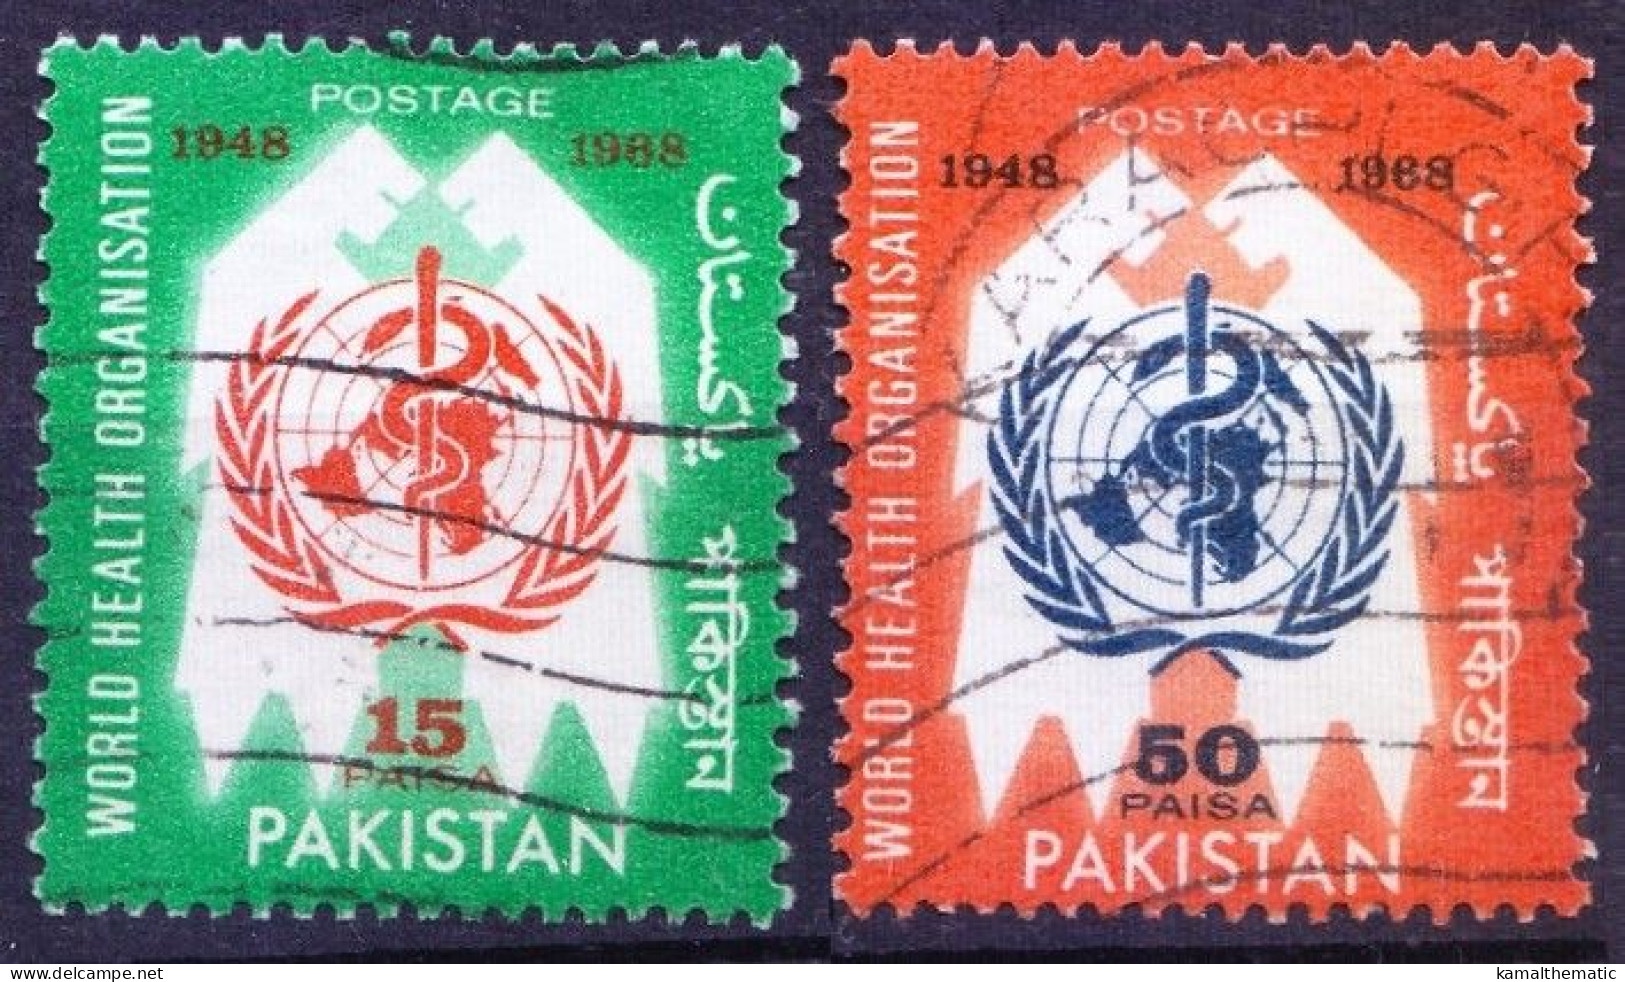 Pakistan 1968 Fine Used 2v, W.H.O. Emblem - OMS